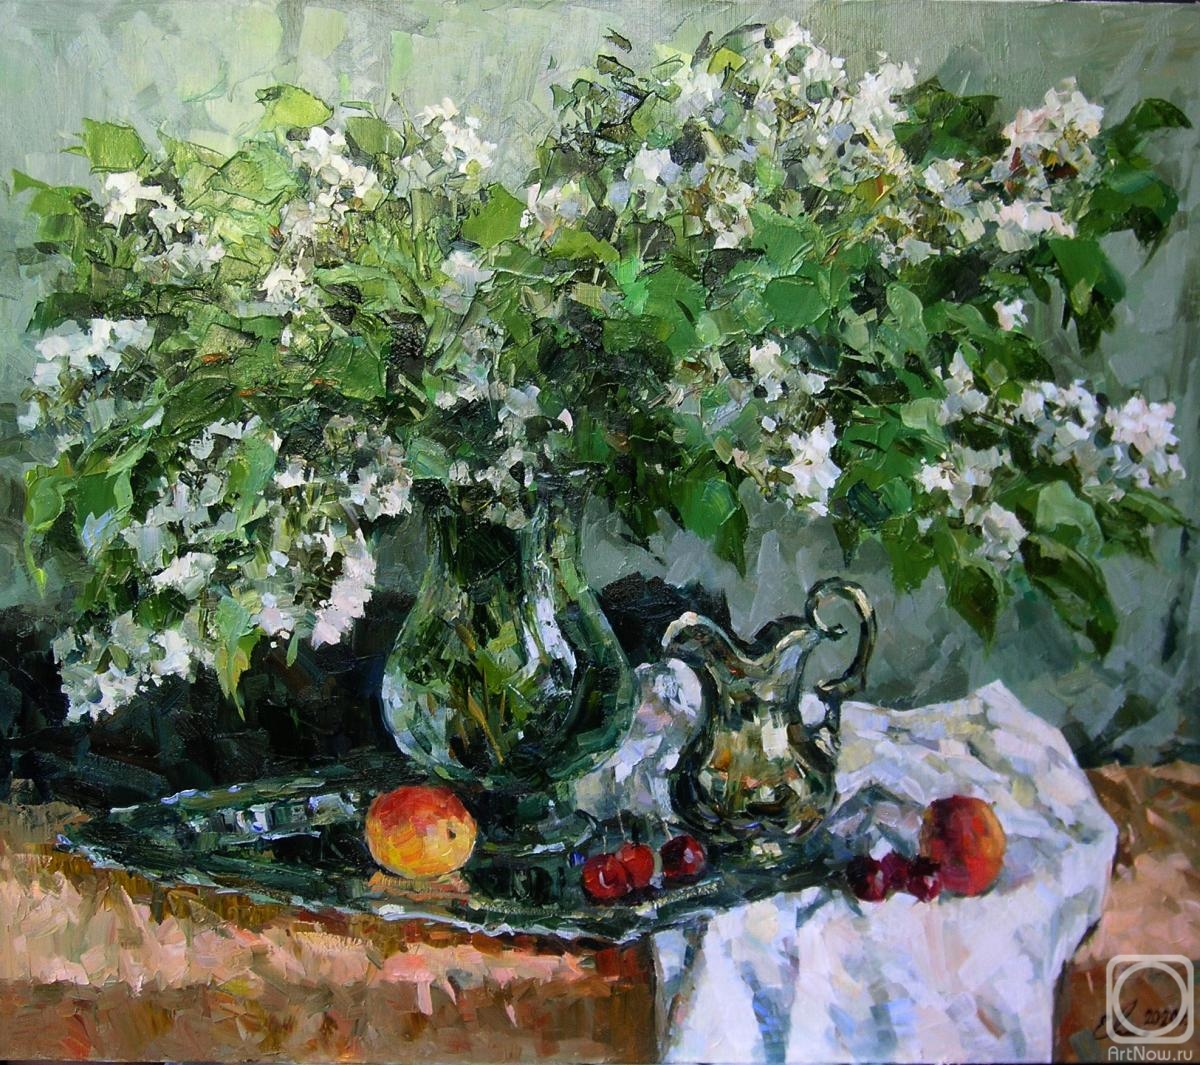 Malykh Evgeny. The bouquet of bird cherry flowers